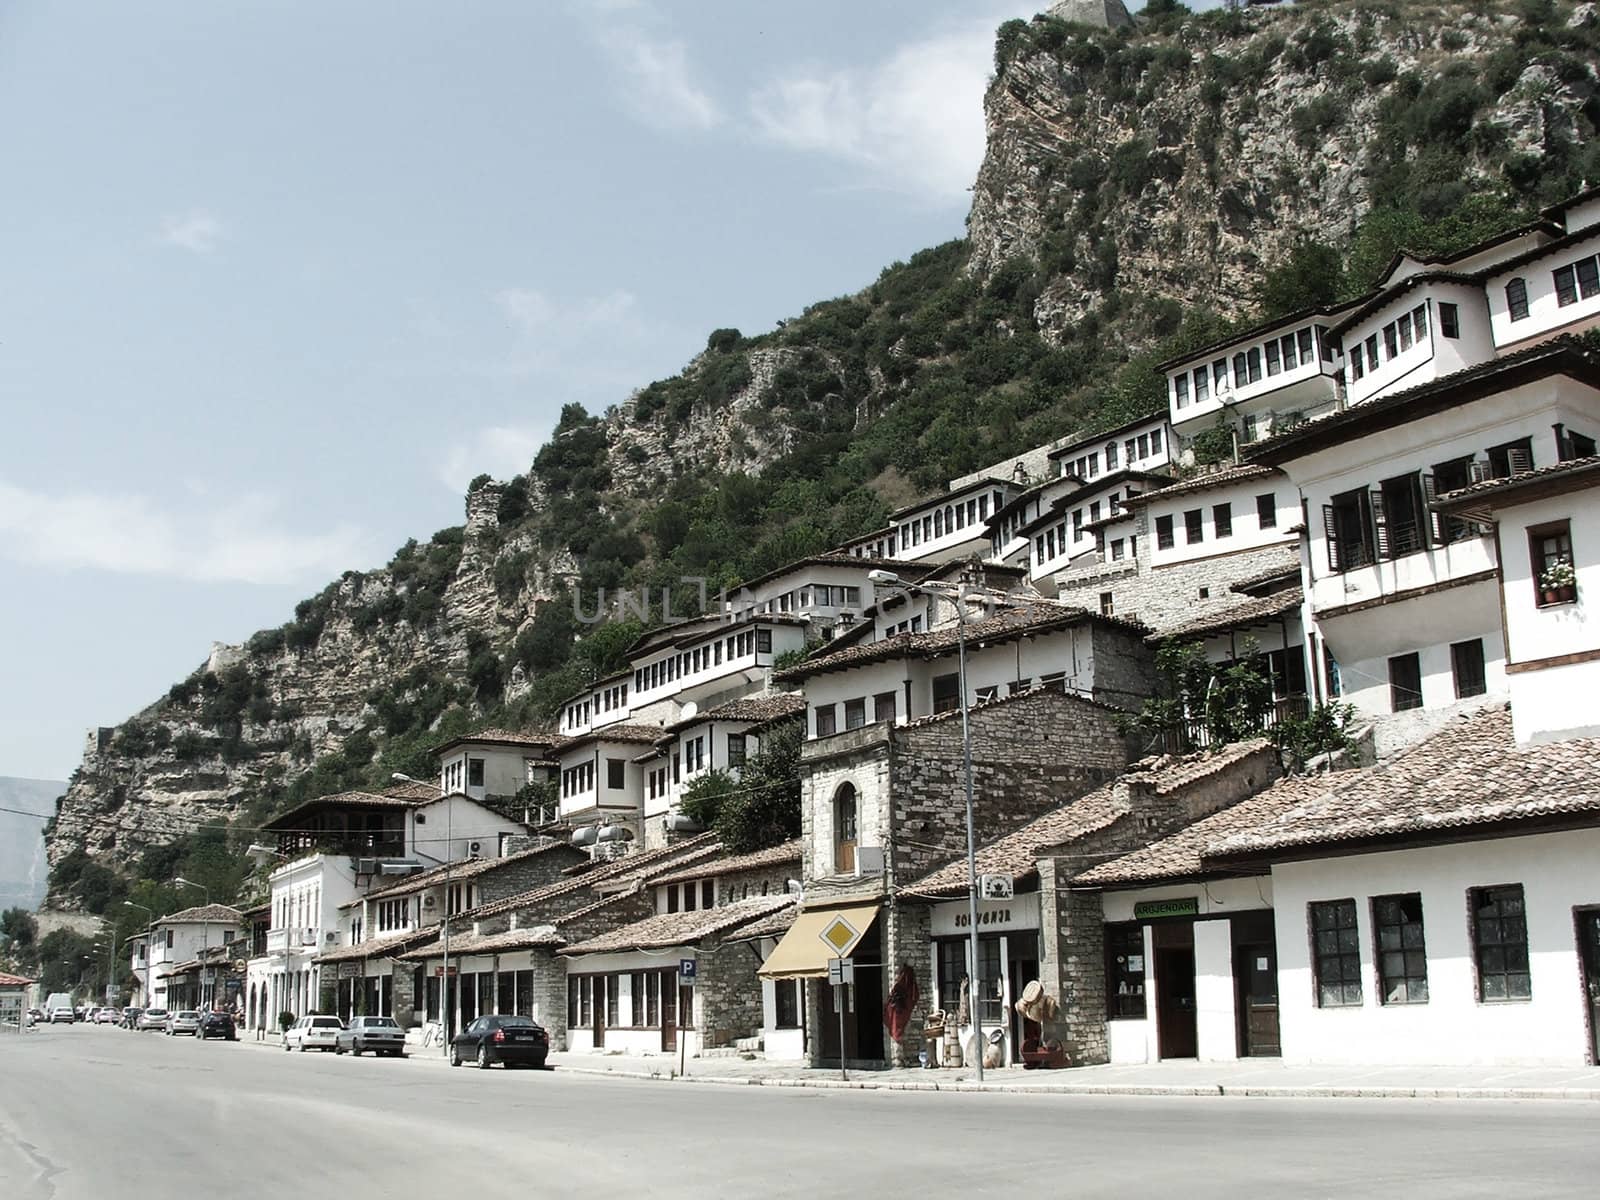 Town of a Thousand Windows
Berat Albania 2010